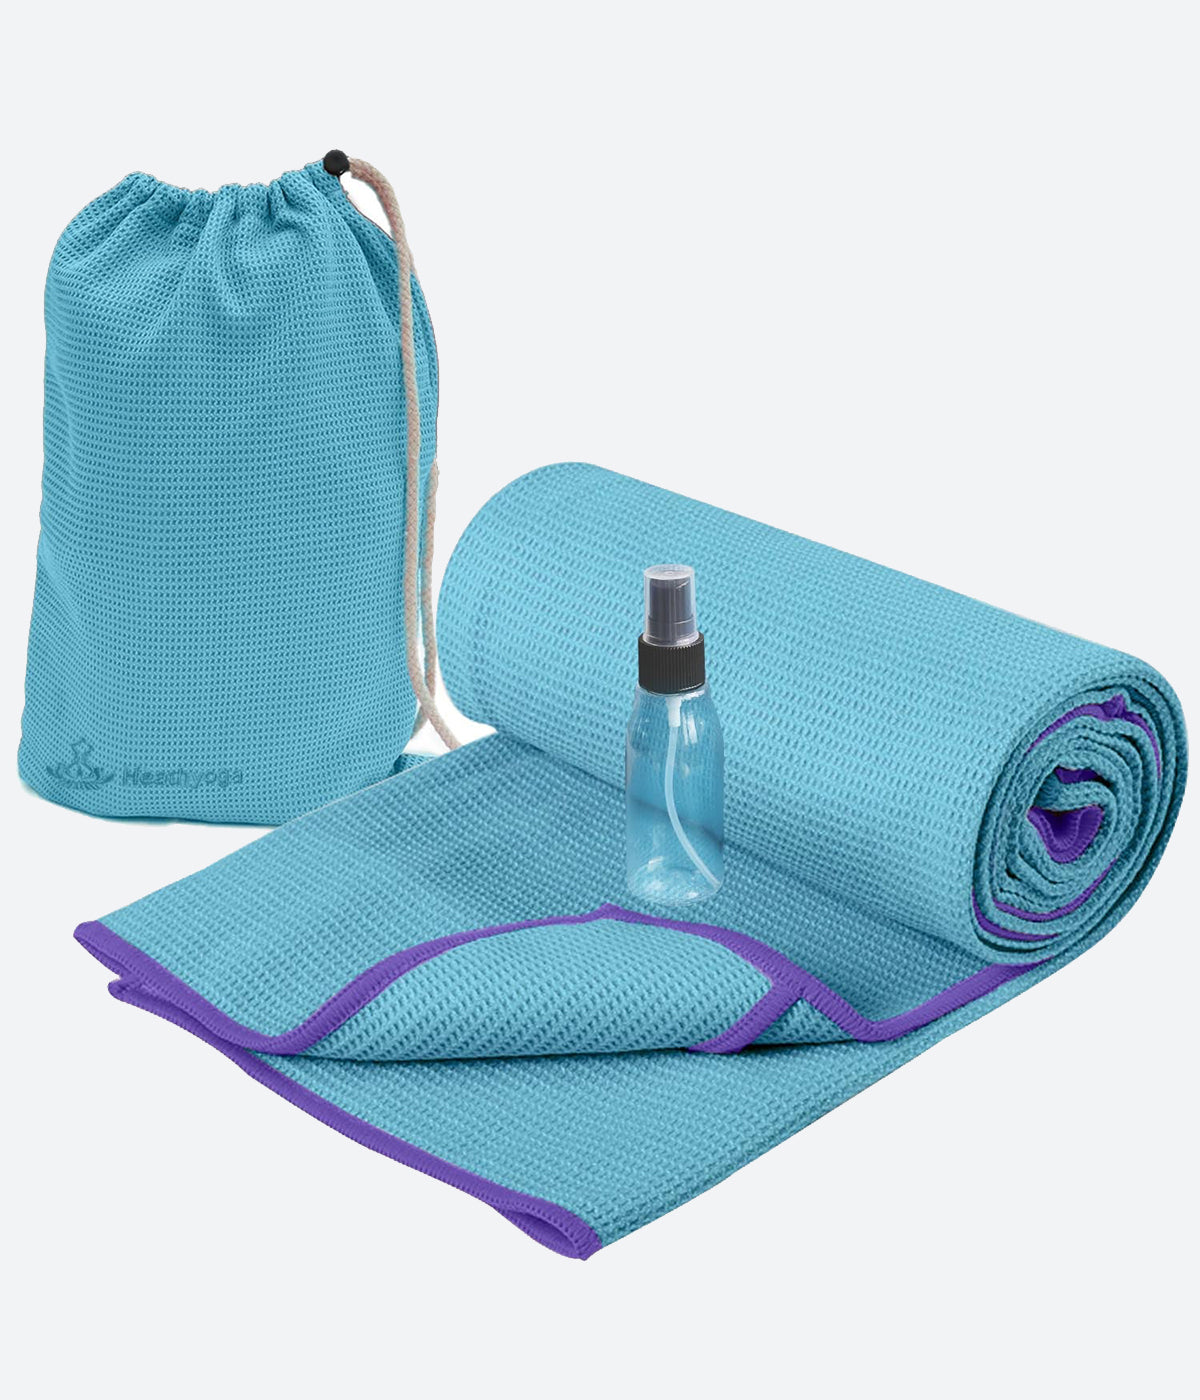 Yoga Towel - Tie-Die Textures Non-Slip Yoga Towel with Bag